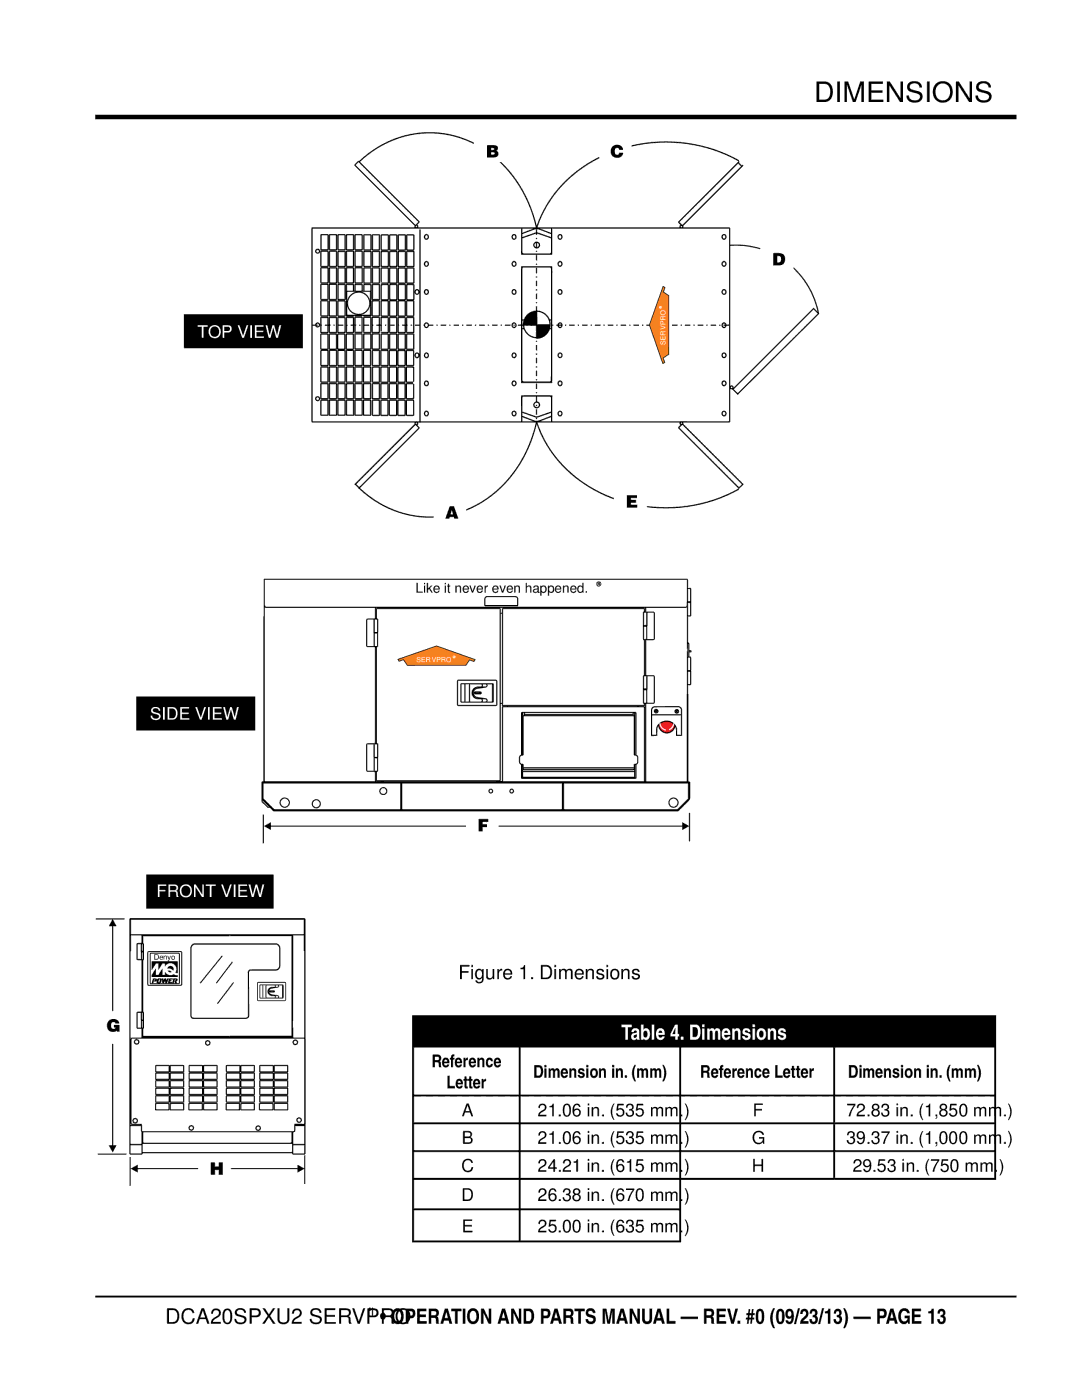 Multiquip DCA20spxu2 manual Dimensions 